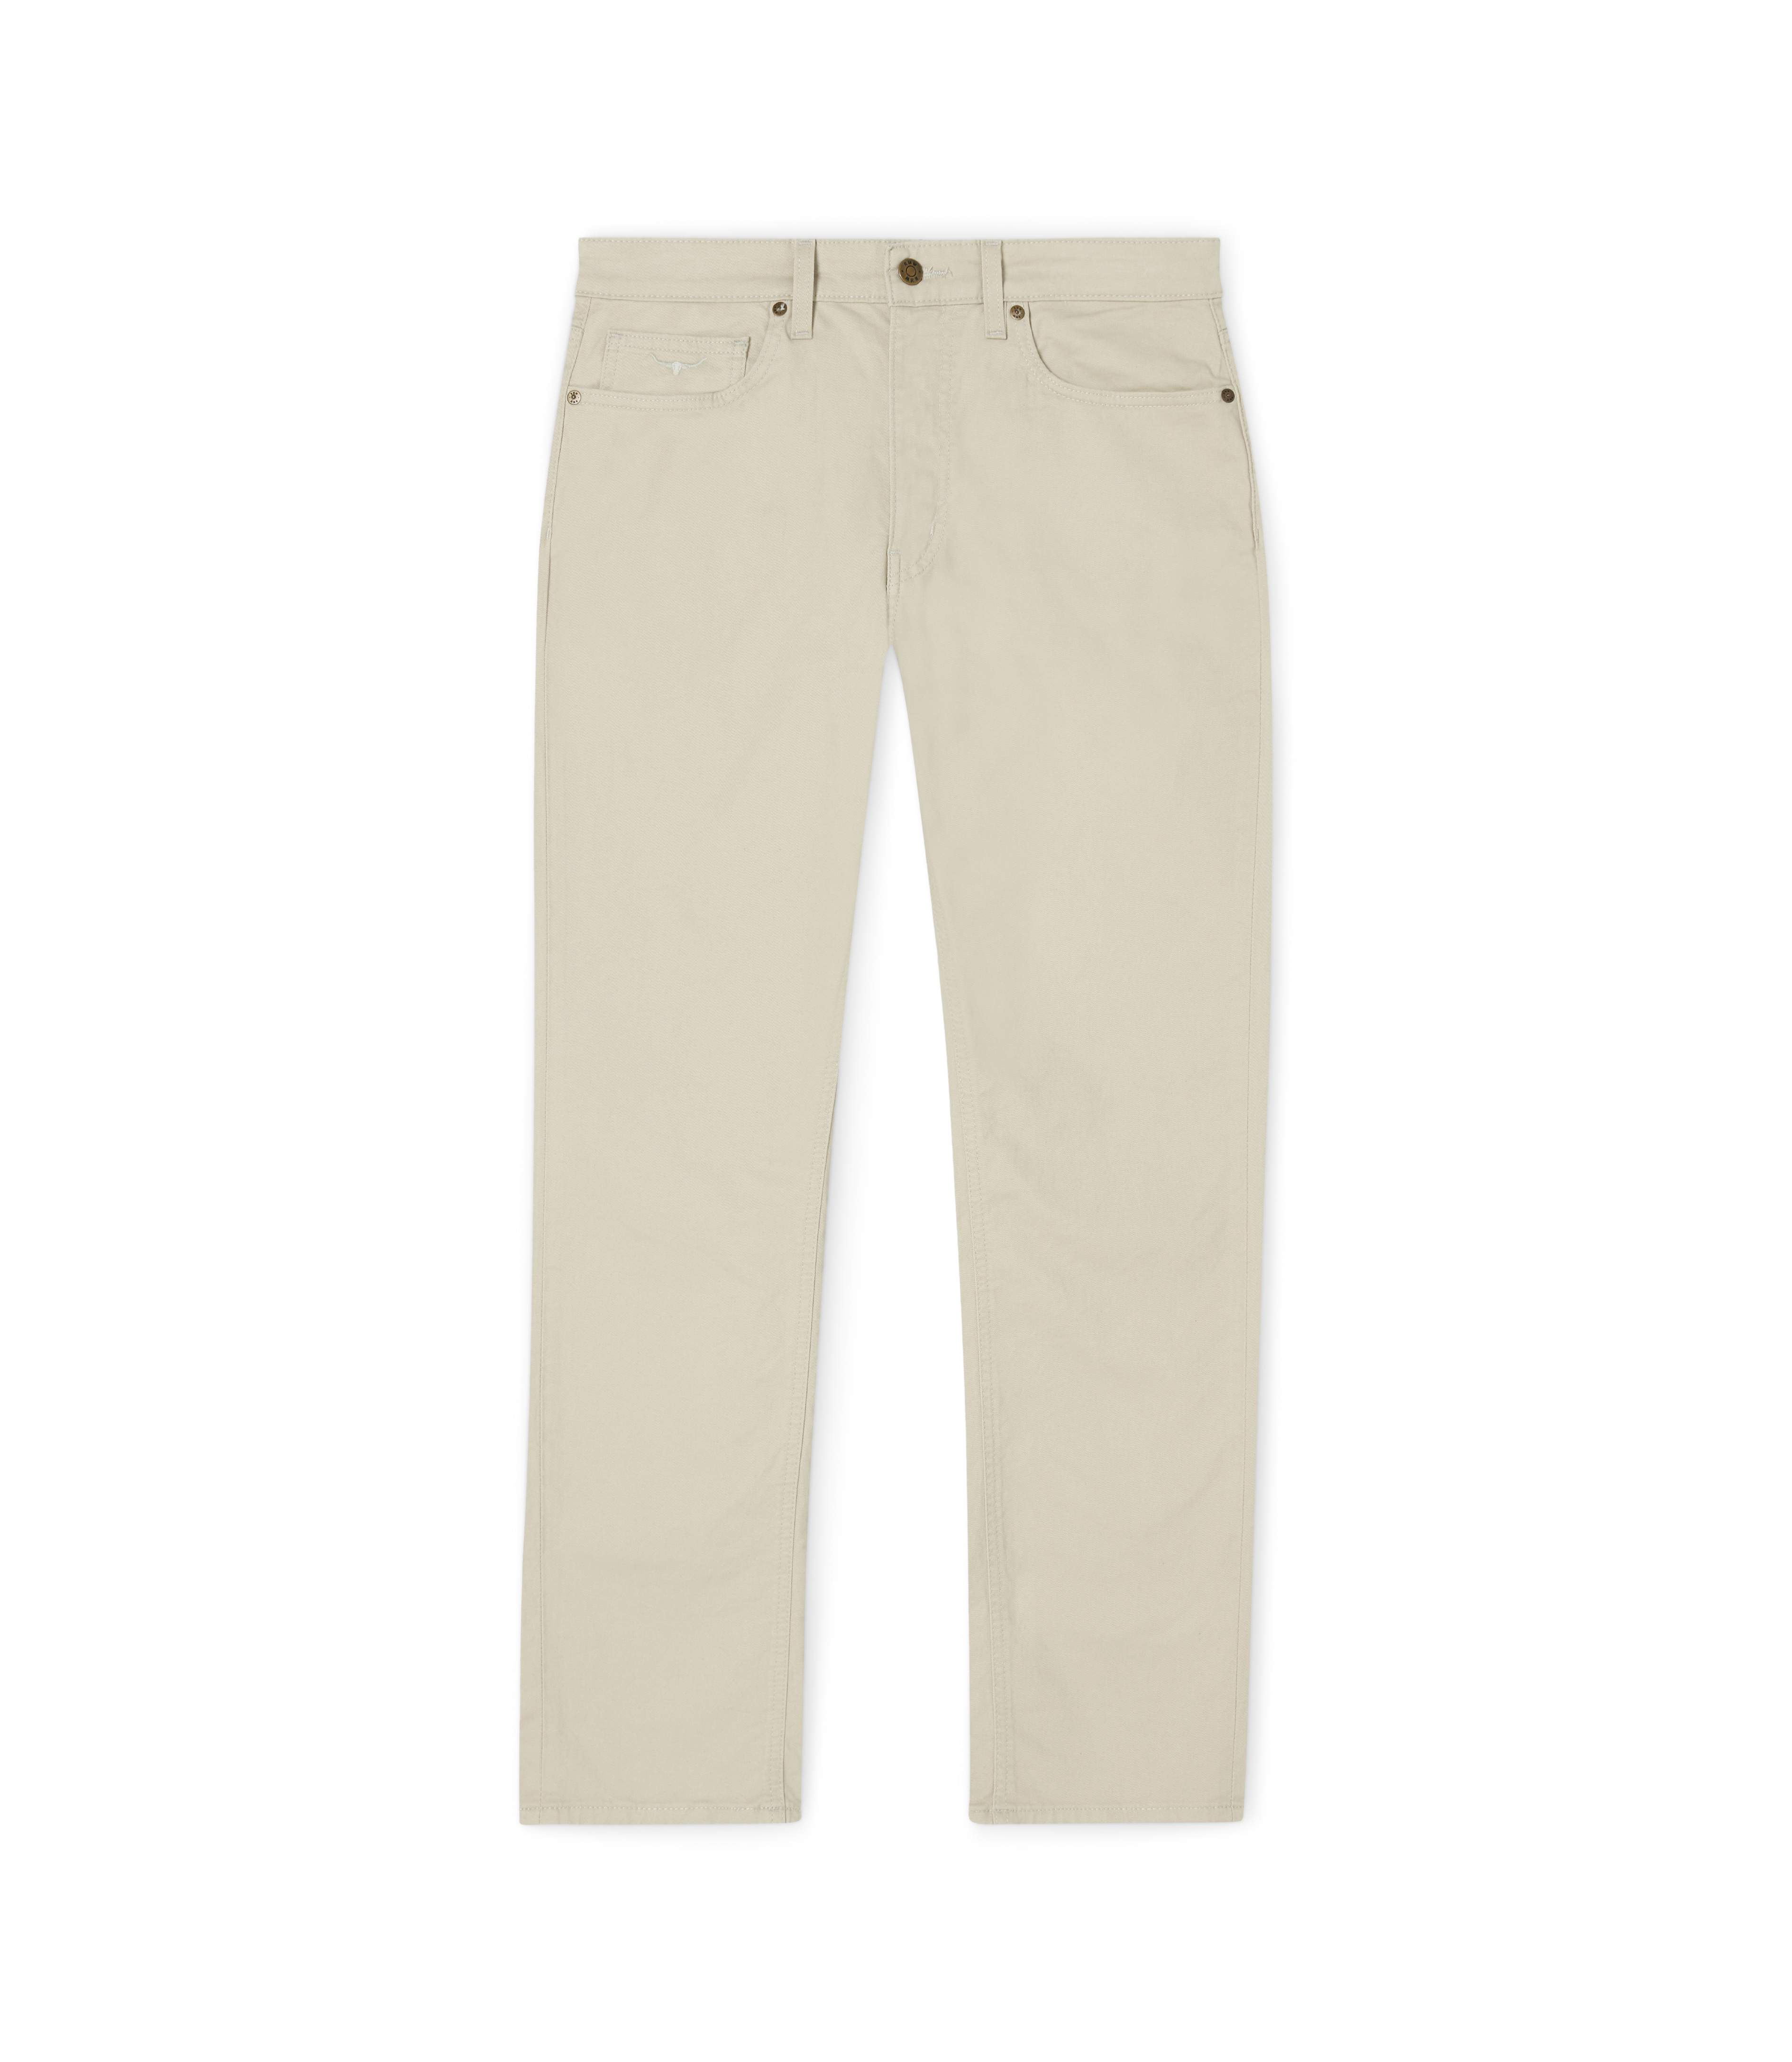 RM Williams Ramco Jeans, regular fit, low rise - Wallers Mildura